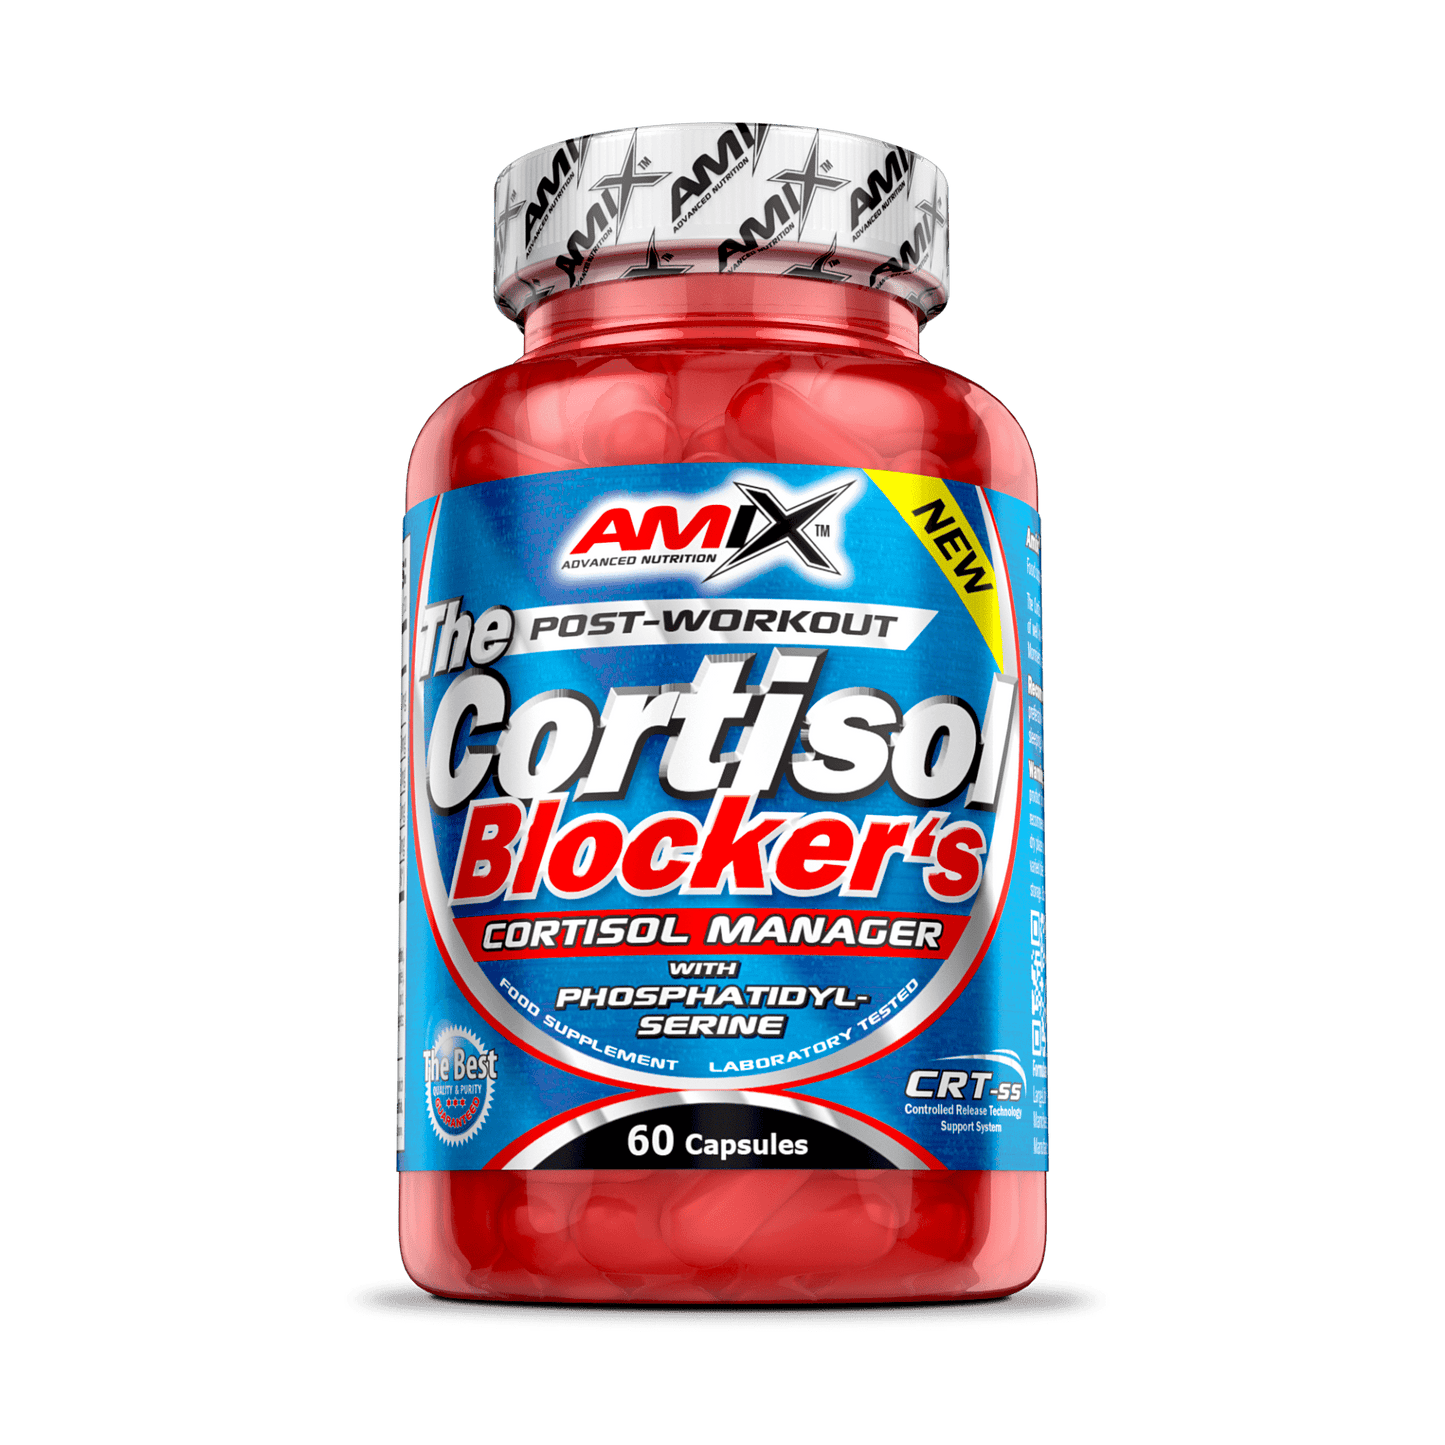 Cortisol Blocker's post workout amix